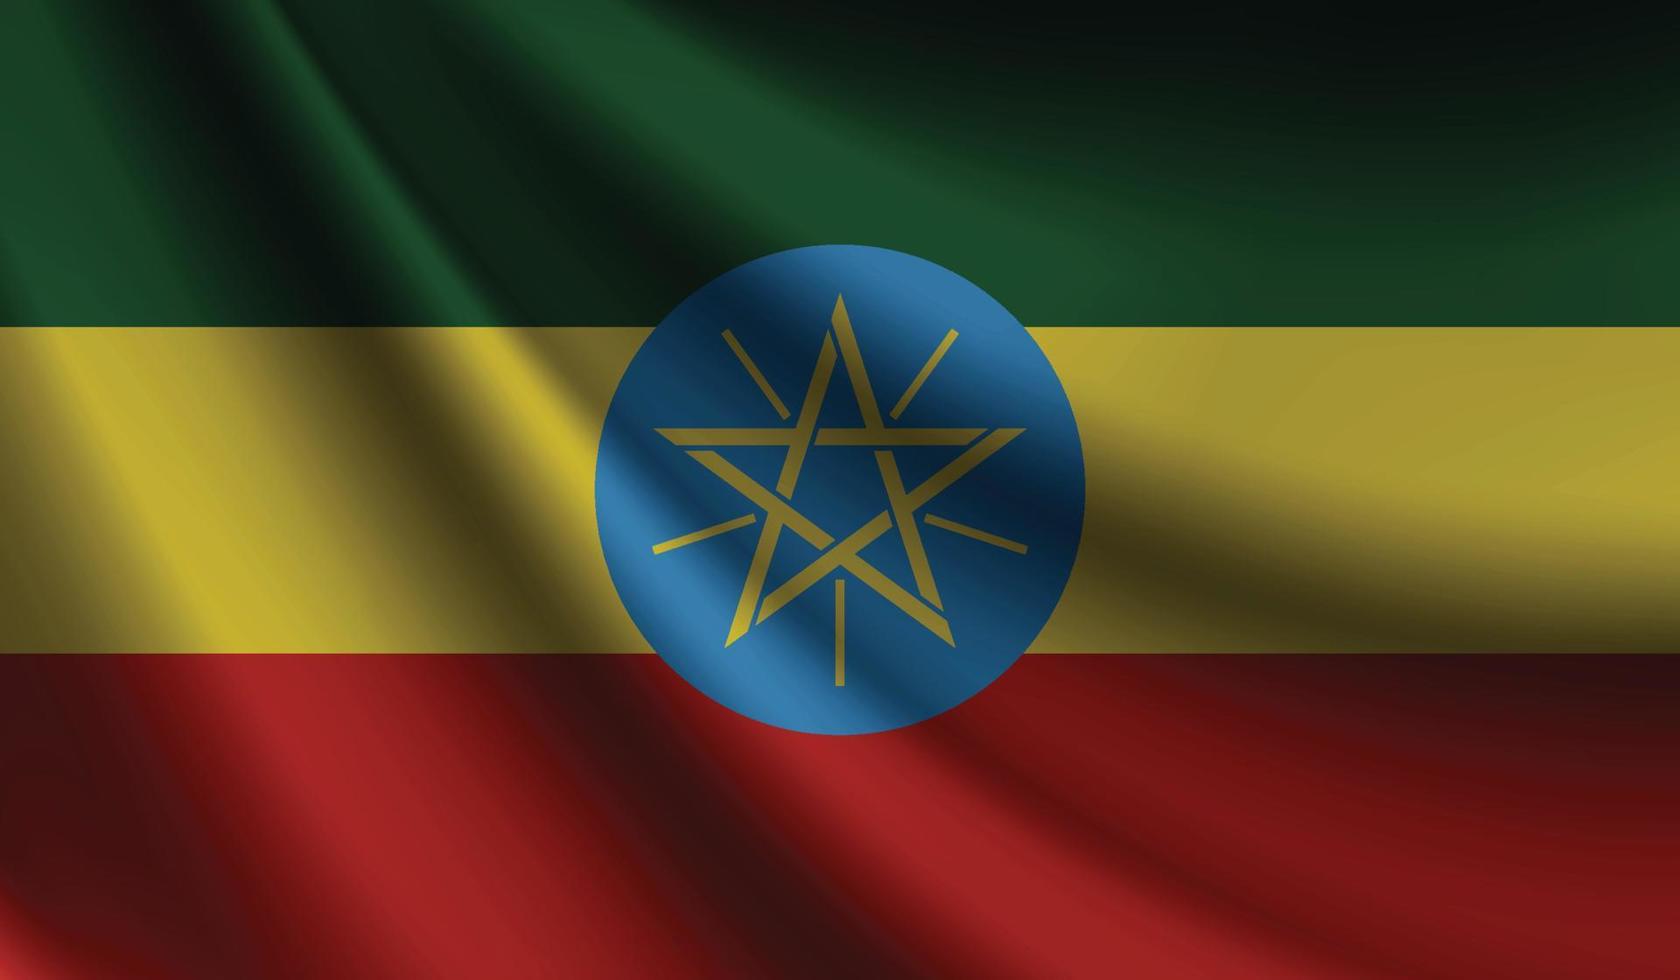 acenando a bandeira da etiópia. fundo para design patriótico e nacional vetor